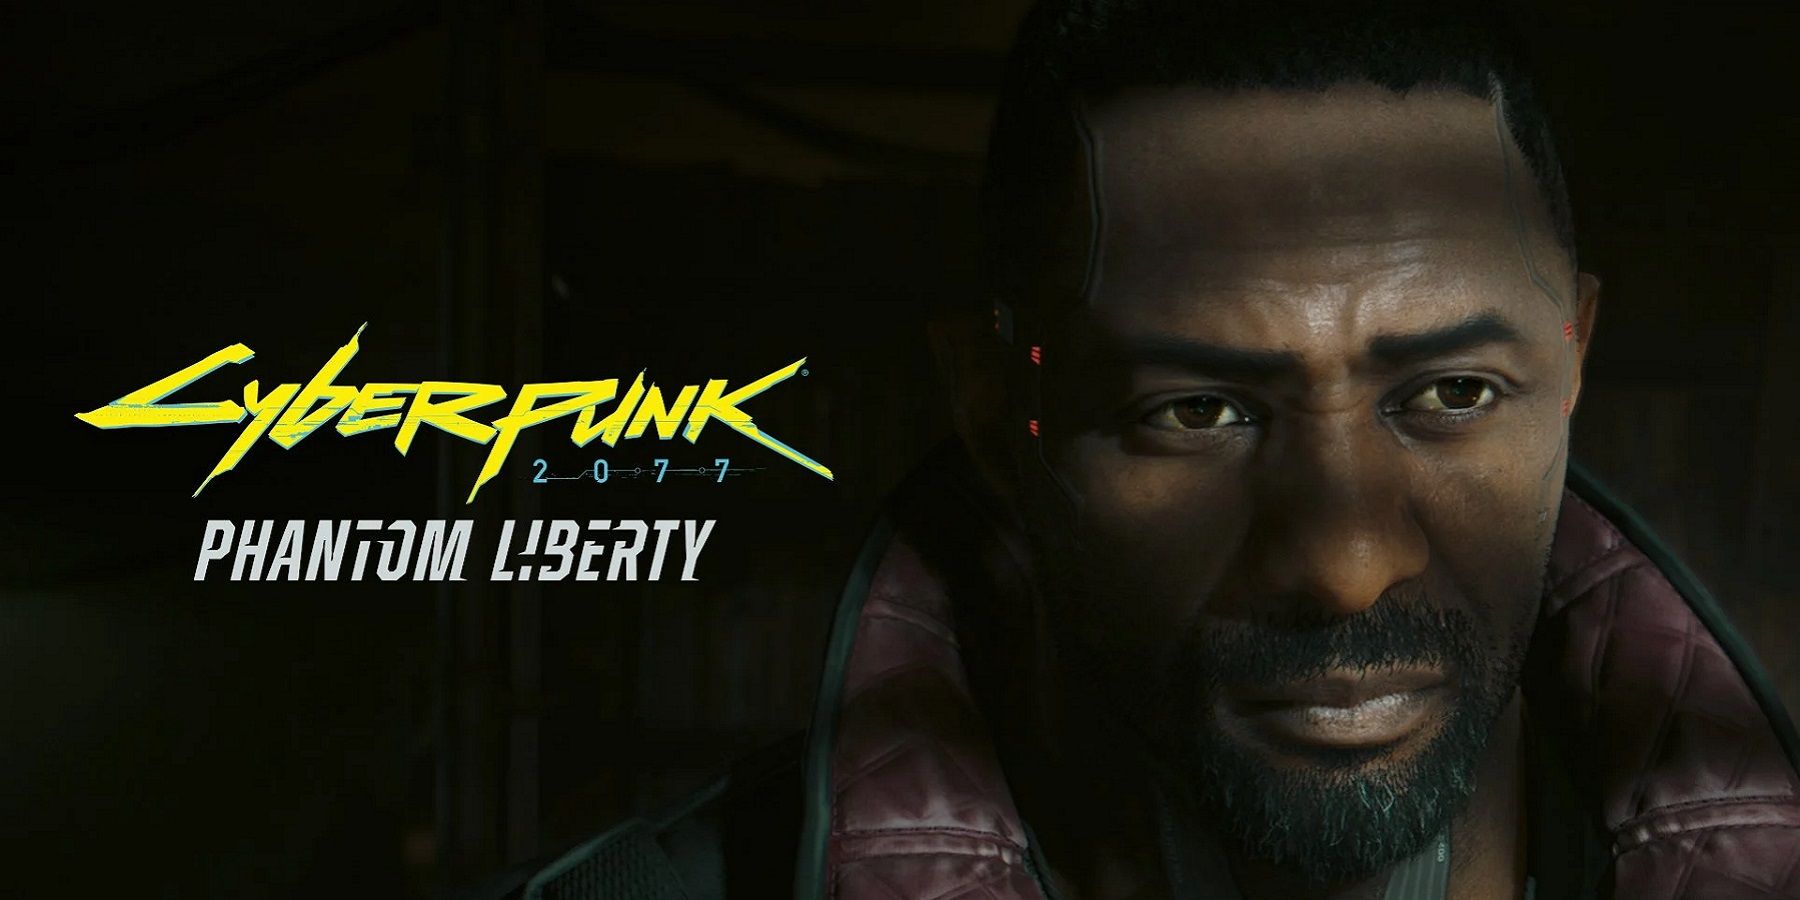 Cyberpunk 2077 Phantom Liberty DLC showing Idris Elba's character.